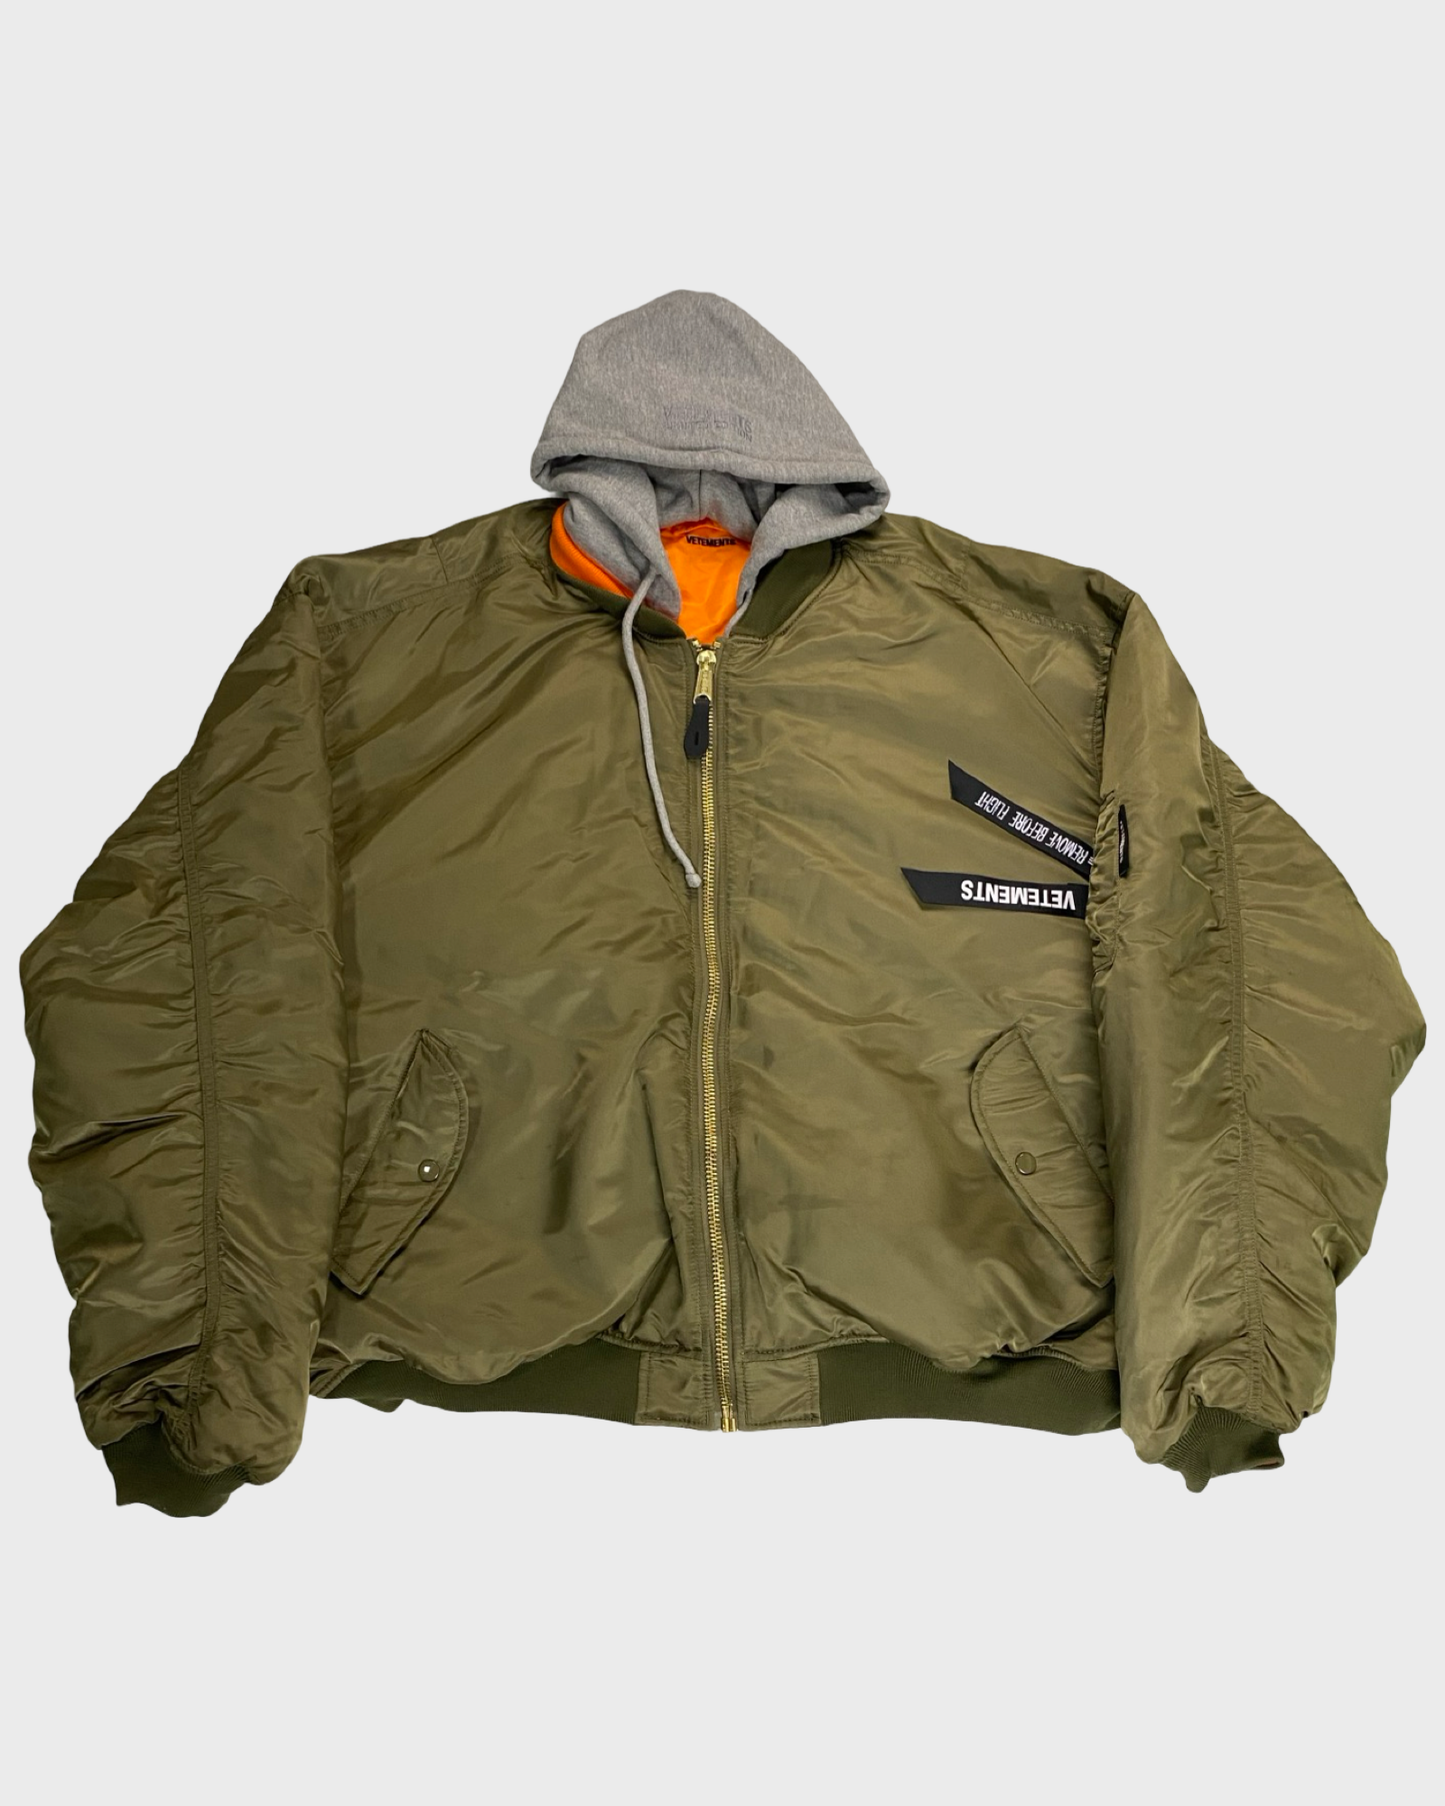 Vetements by Guram olive green MA1 Bomber jacket with orange lining SZ:M